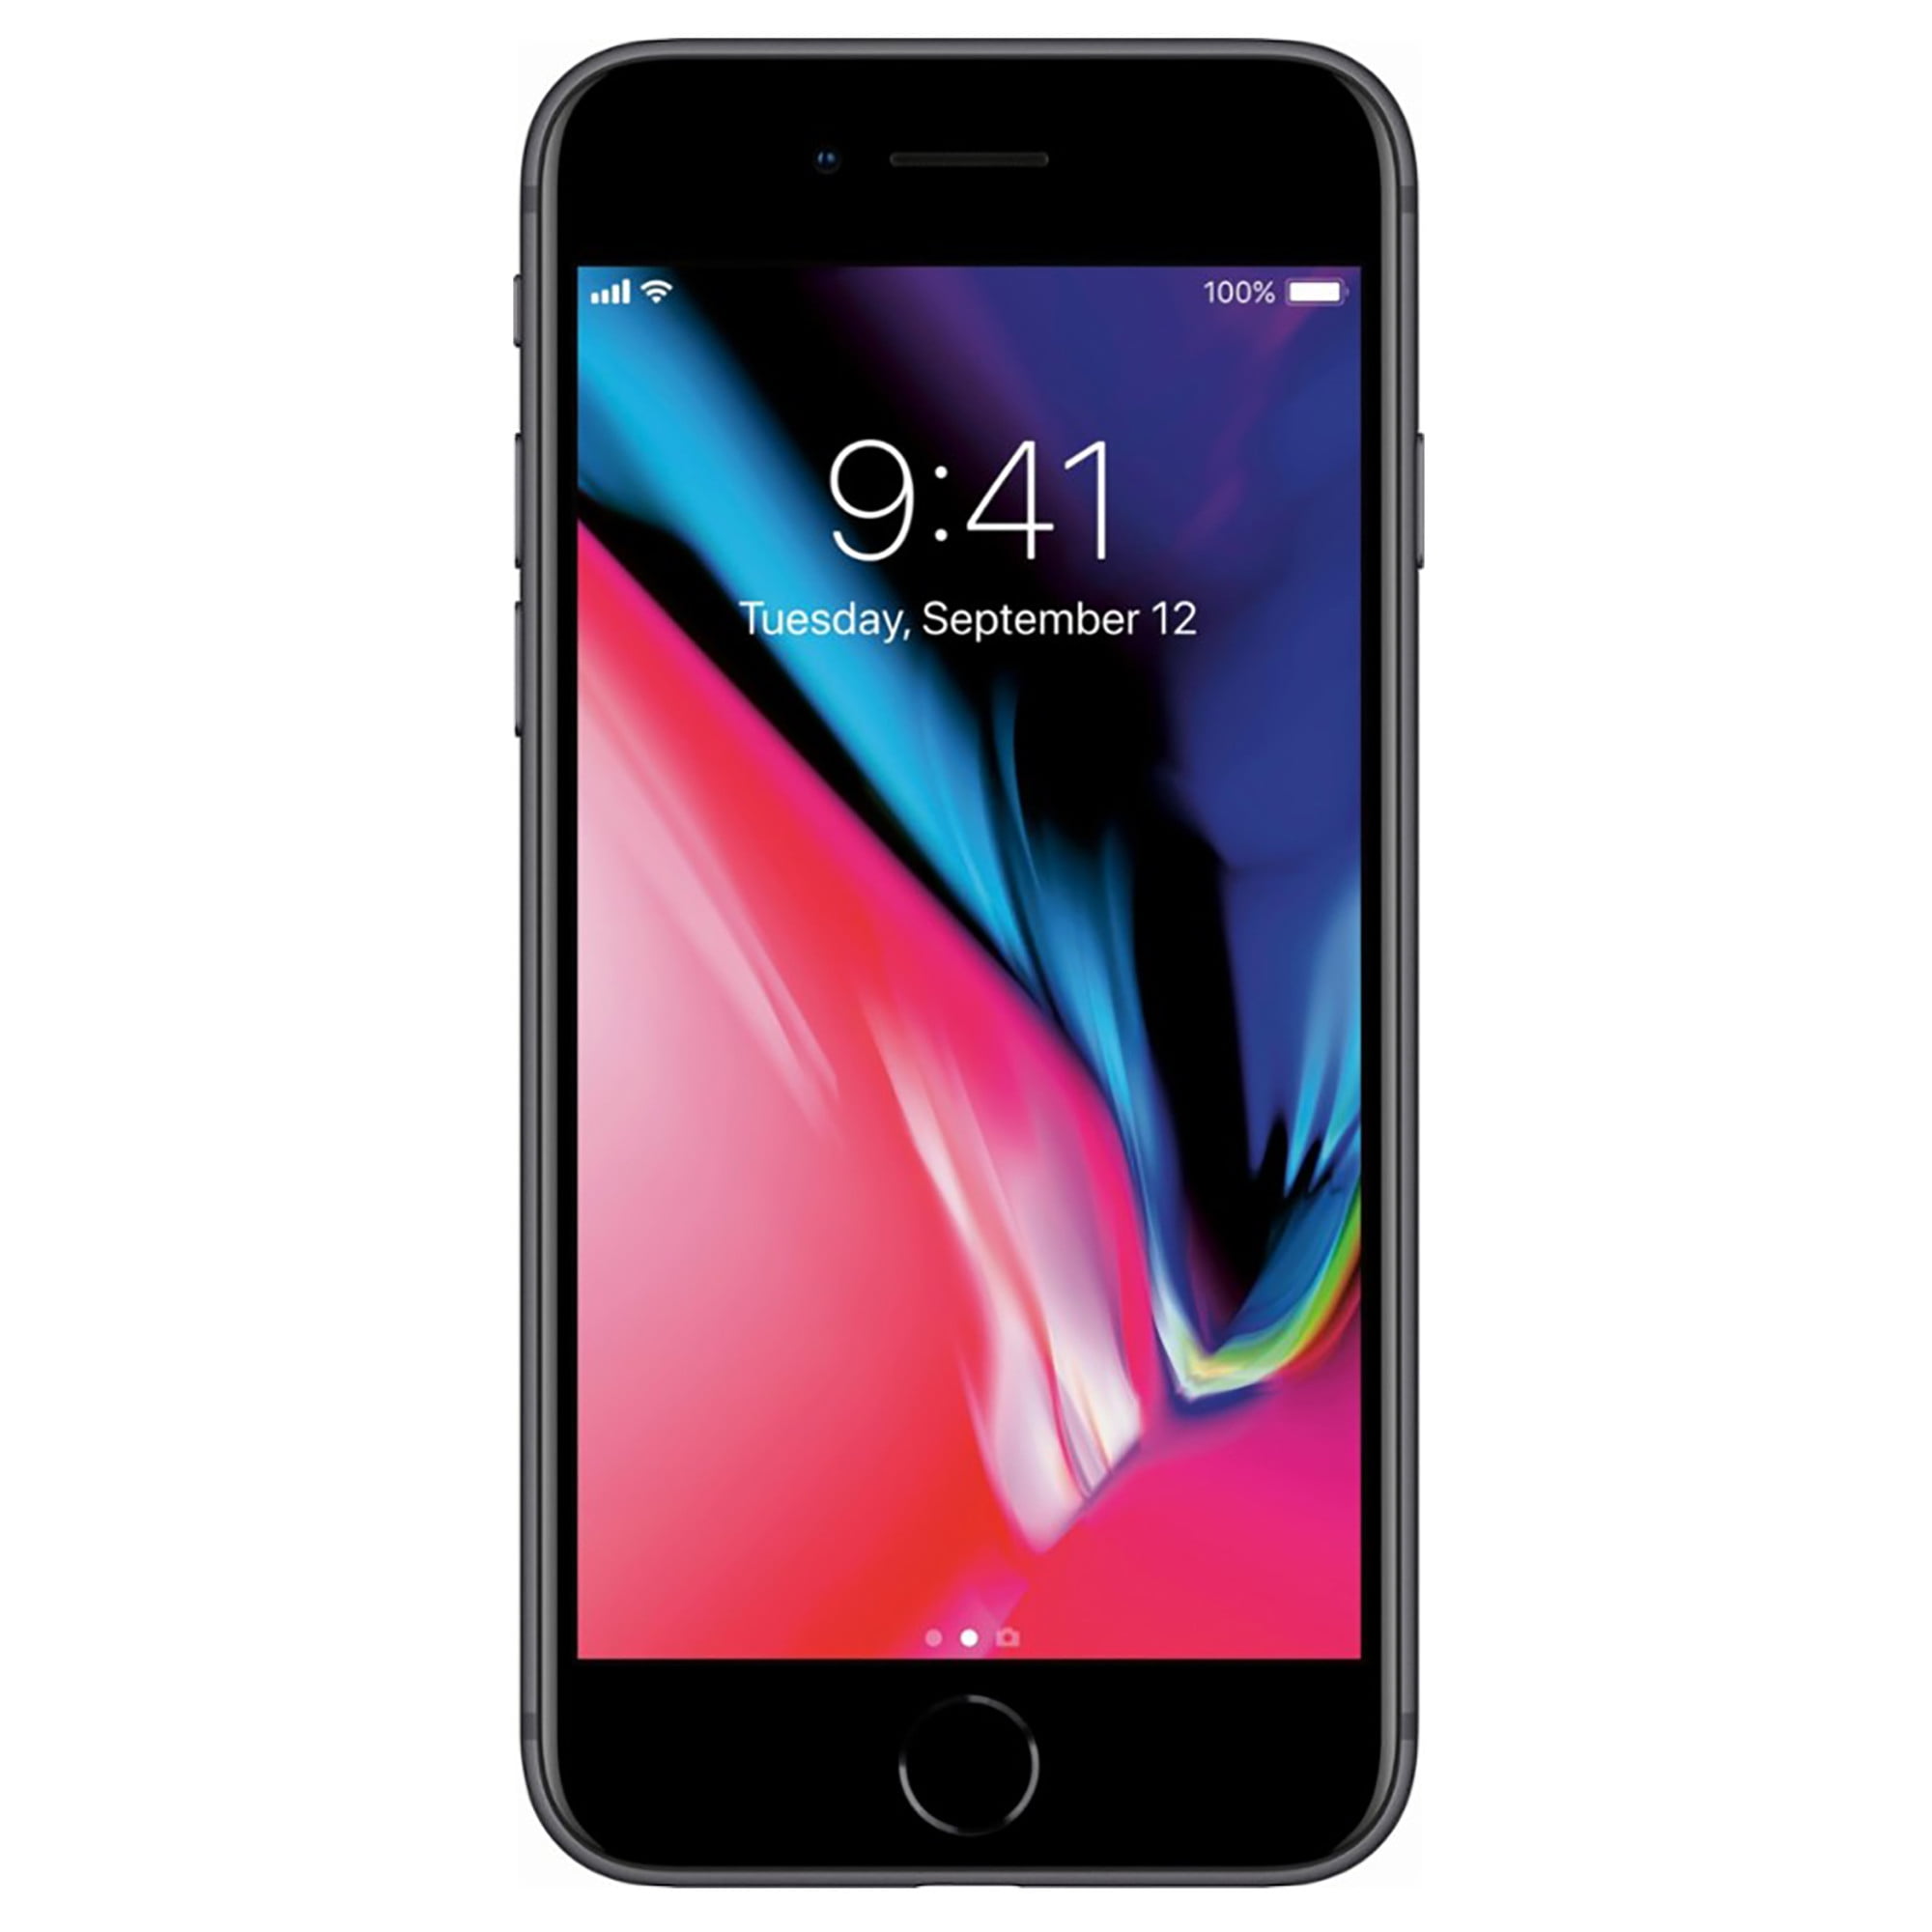 Apple iPhone 8 64GB GSM Unlocked Phone w⁄ 12MP Camera - Space Gray  (Refurbished)